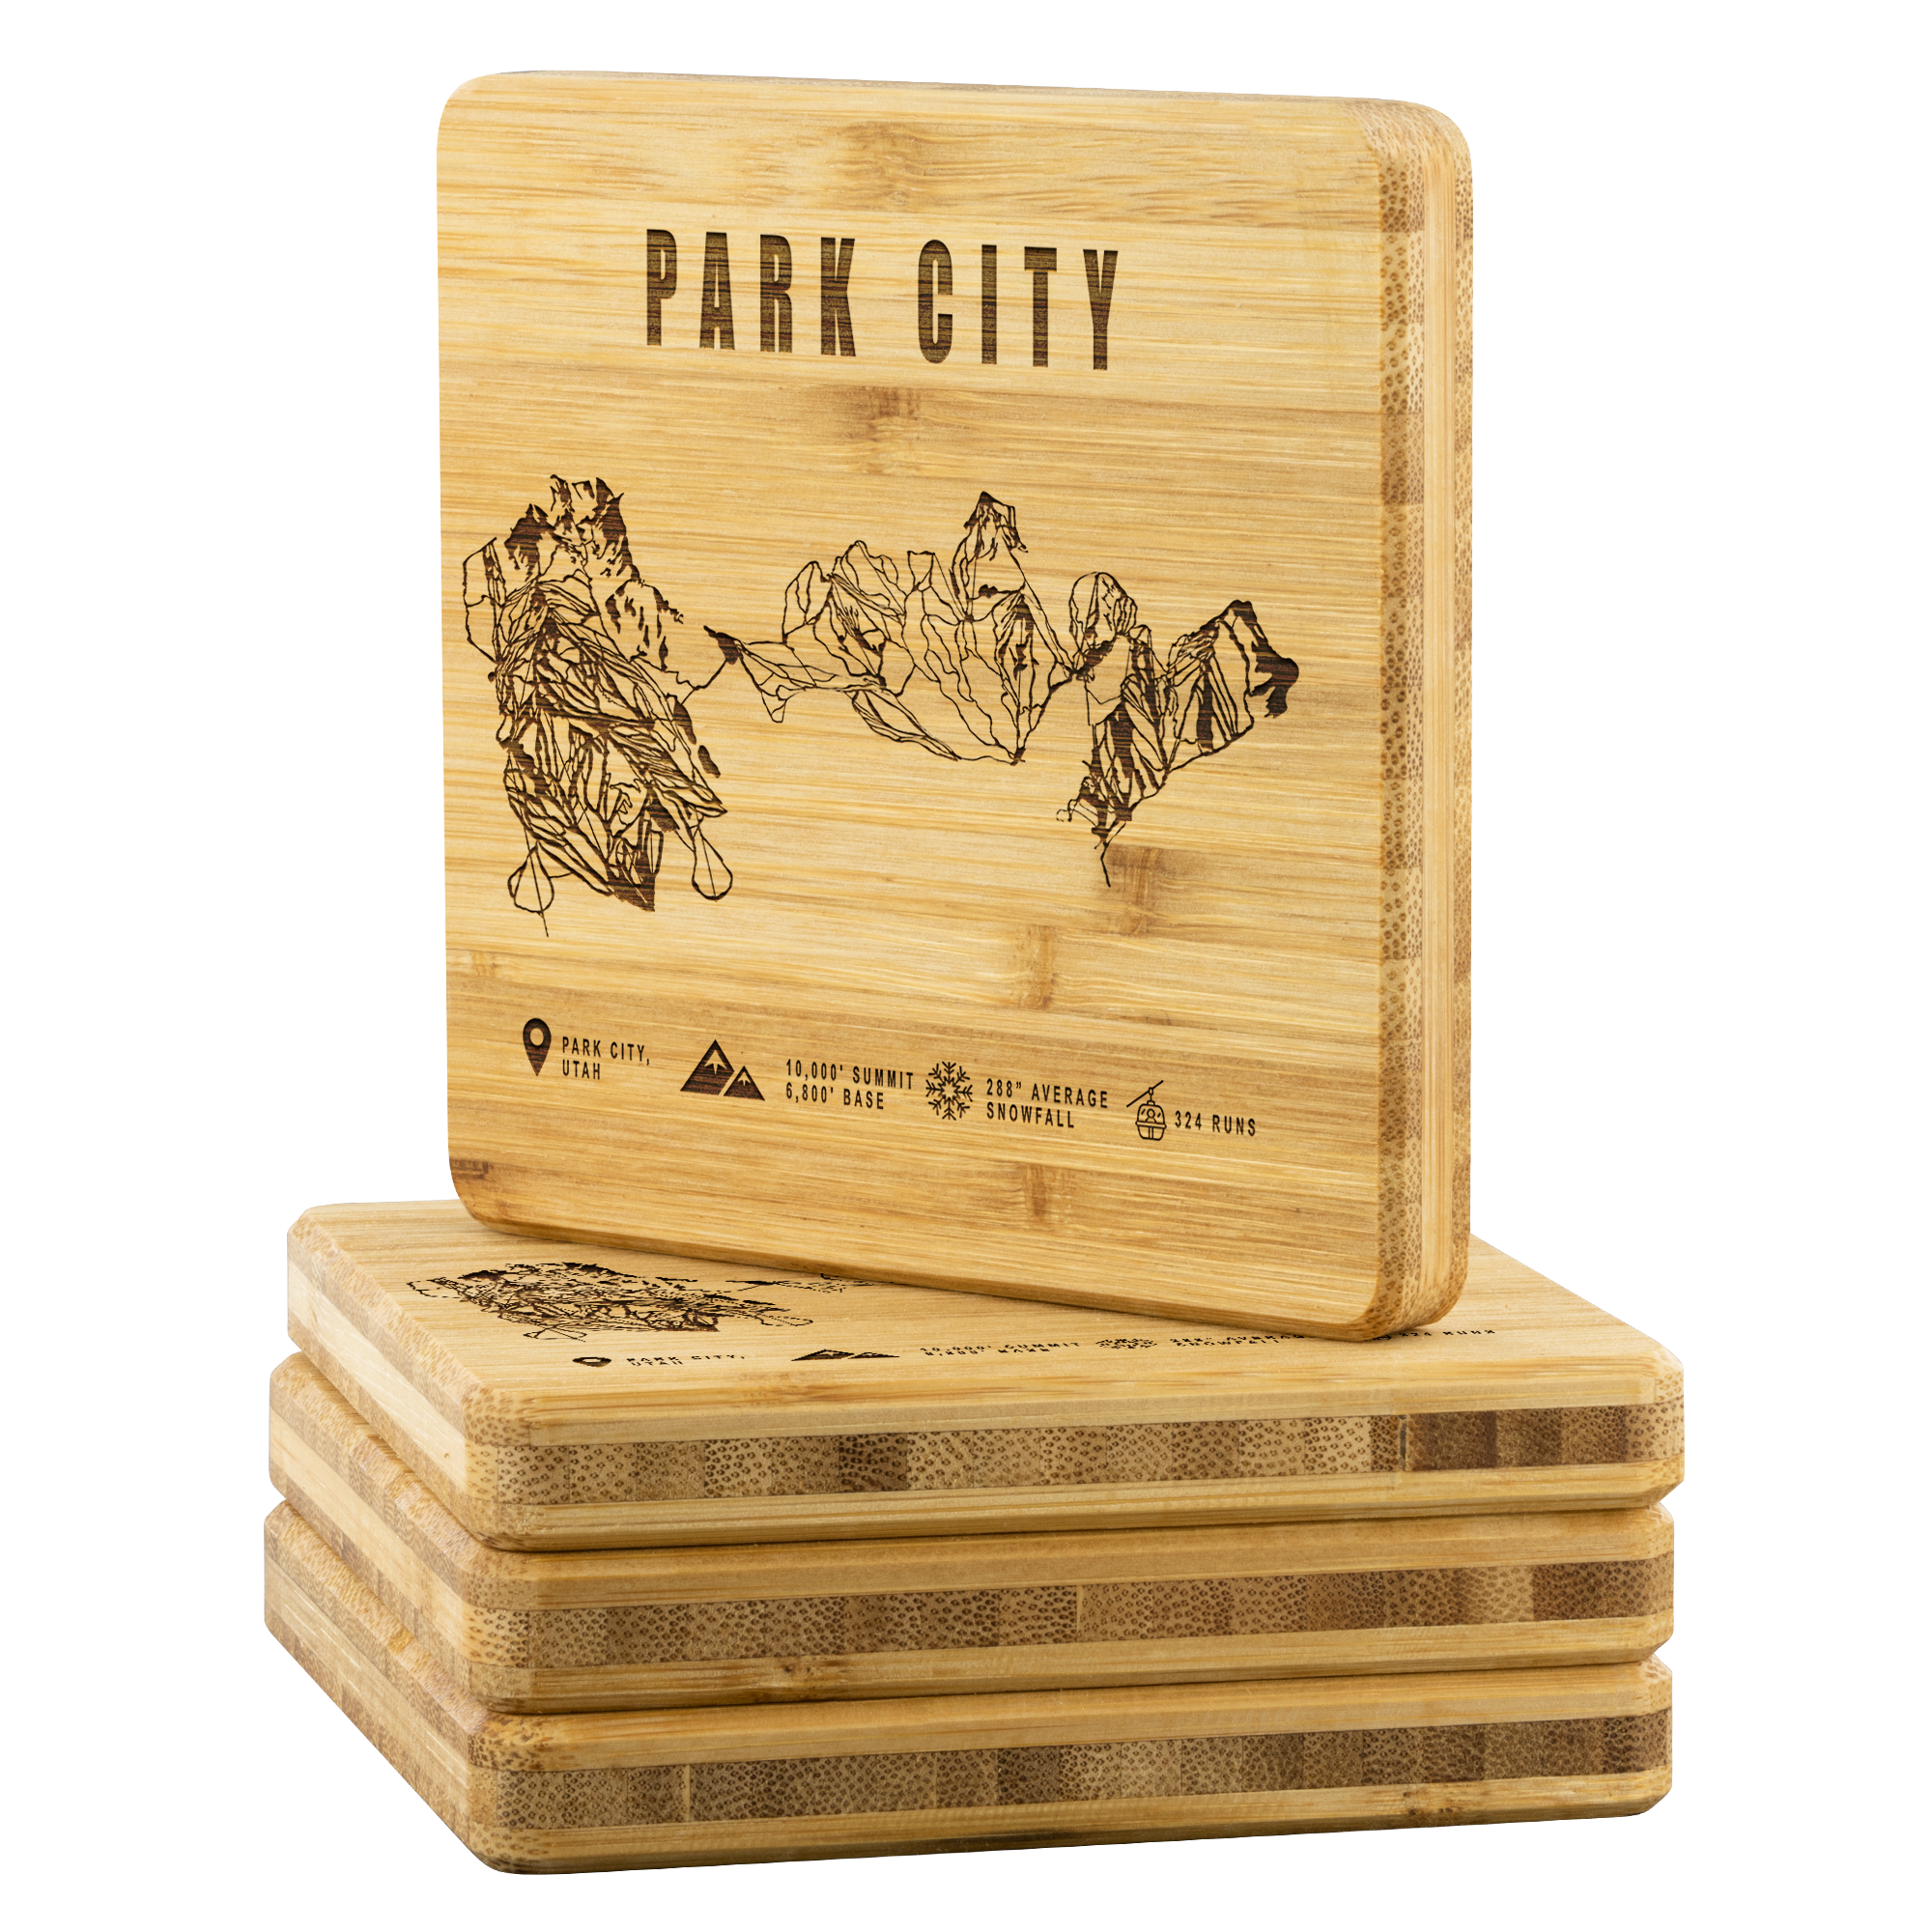 Park city,Utah Ski Trail Map Bamboo Coaster - Powderaddicts